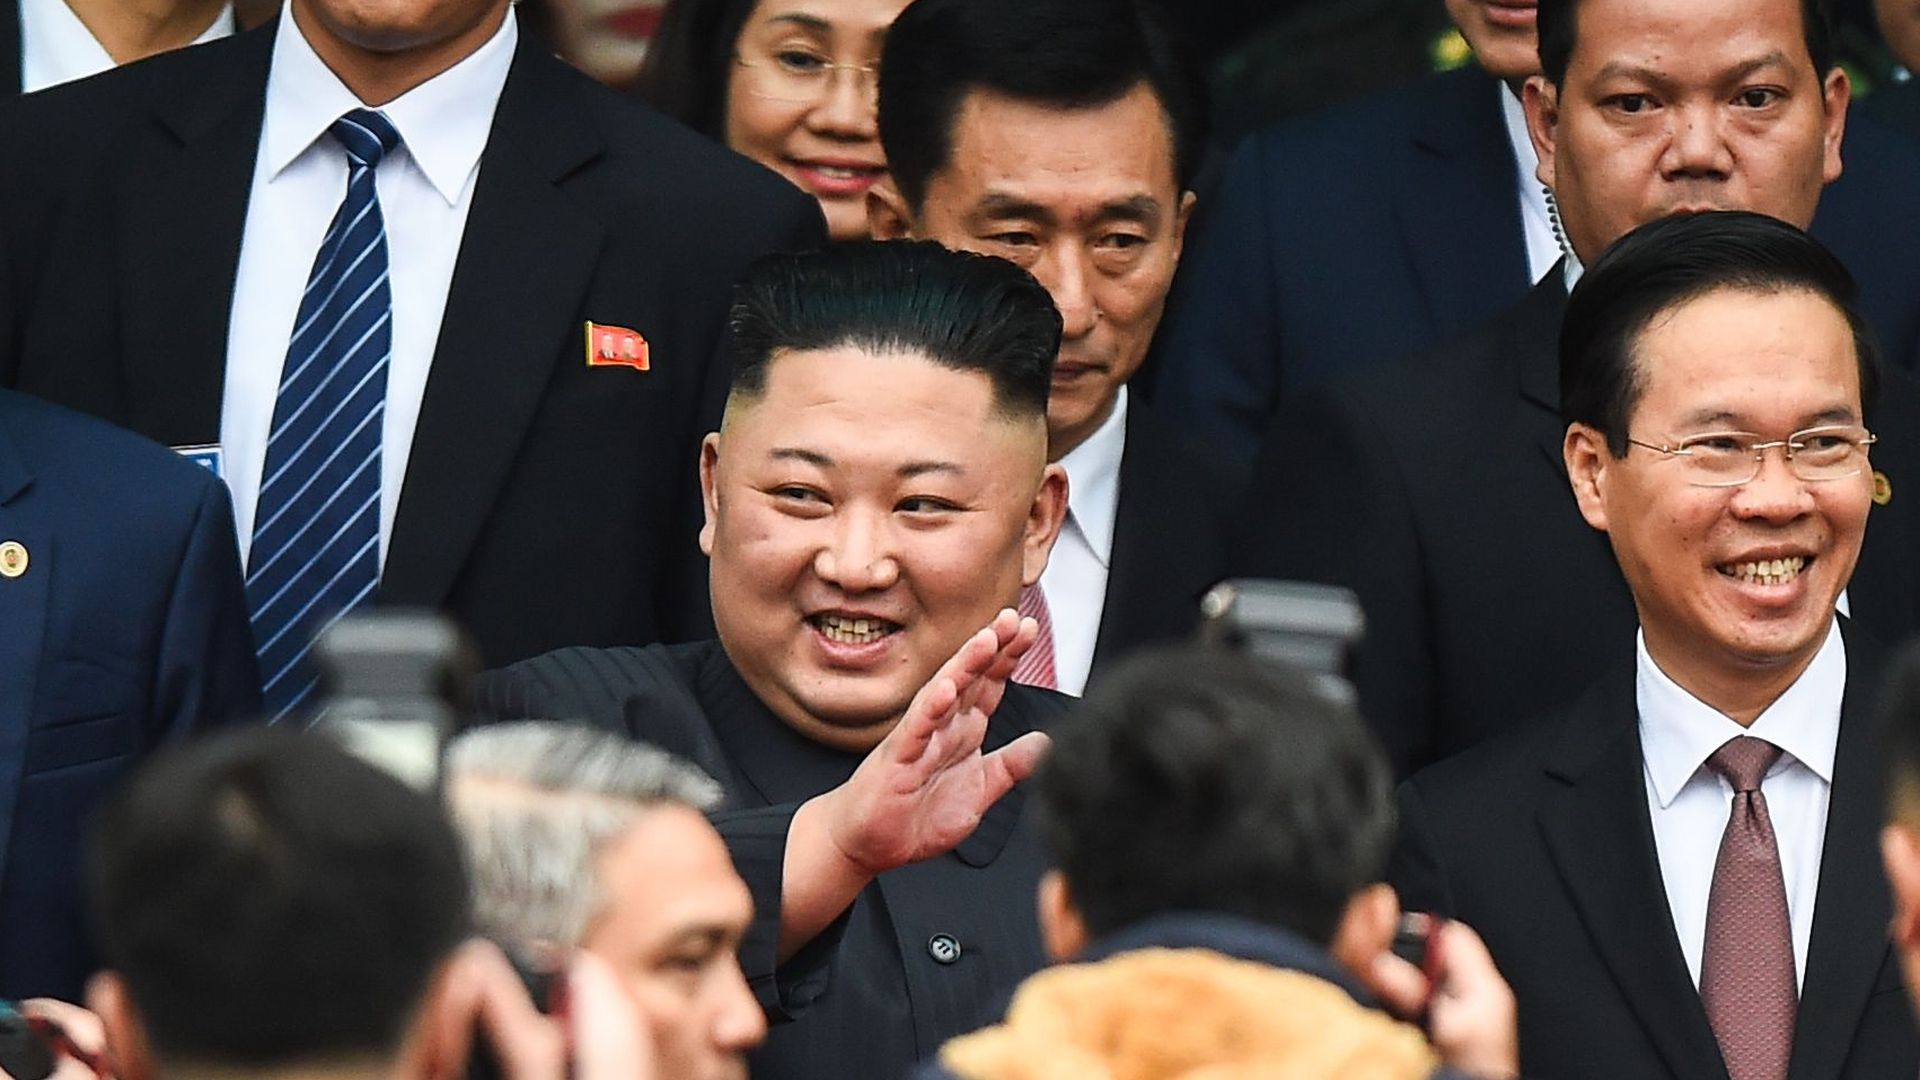 North Korea leader Kim Jong un arrives in Vietnam ahead of his summit with President Trump this week.